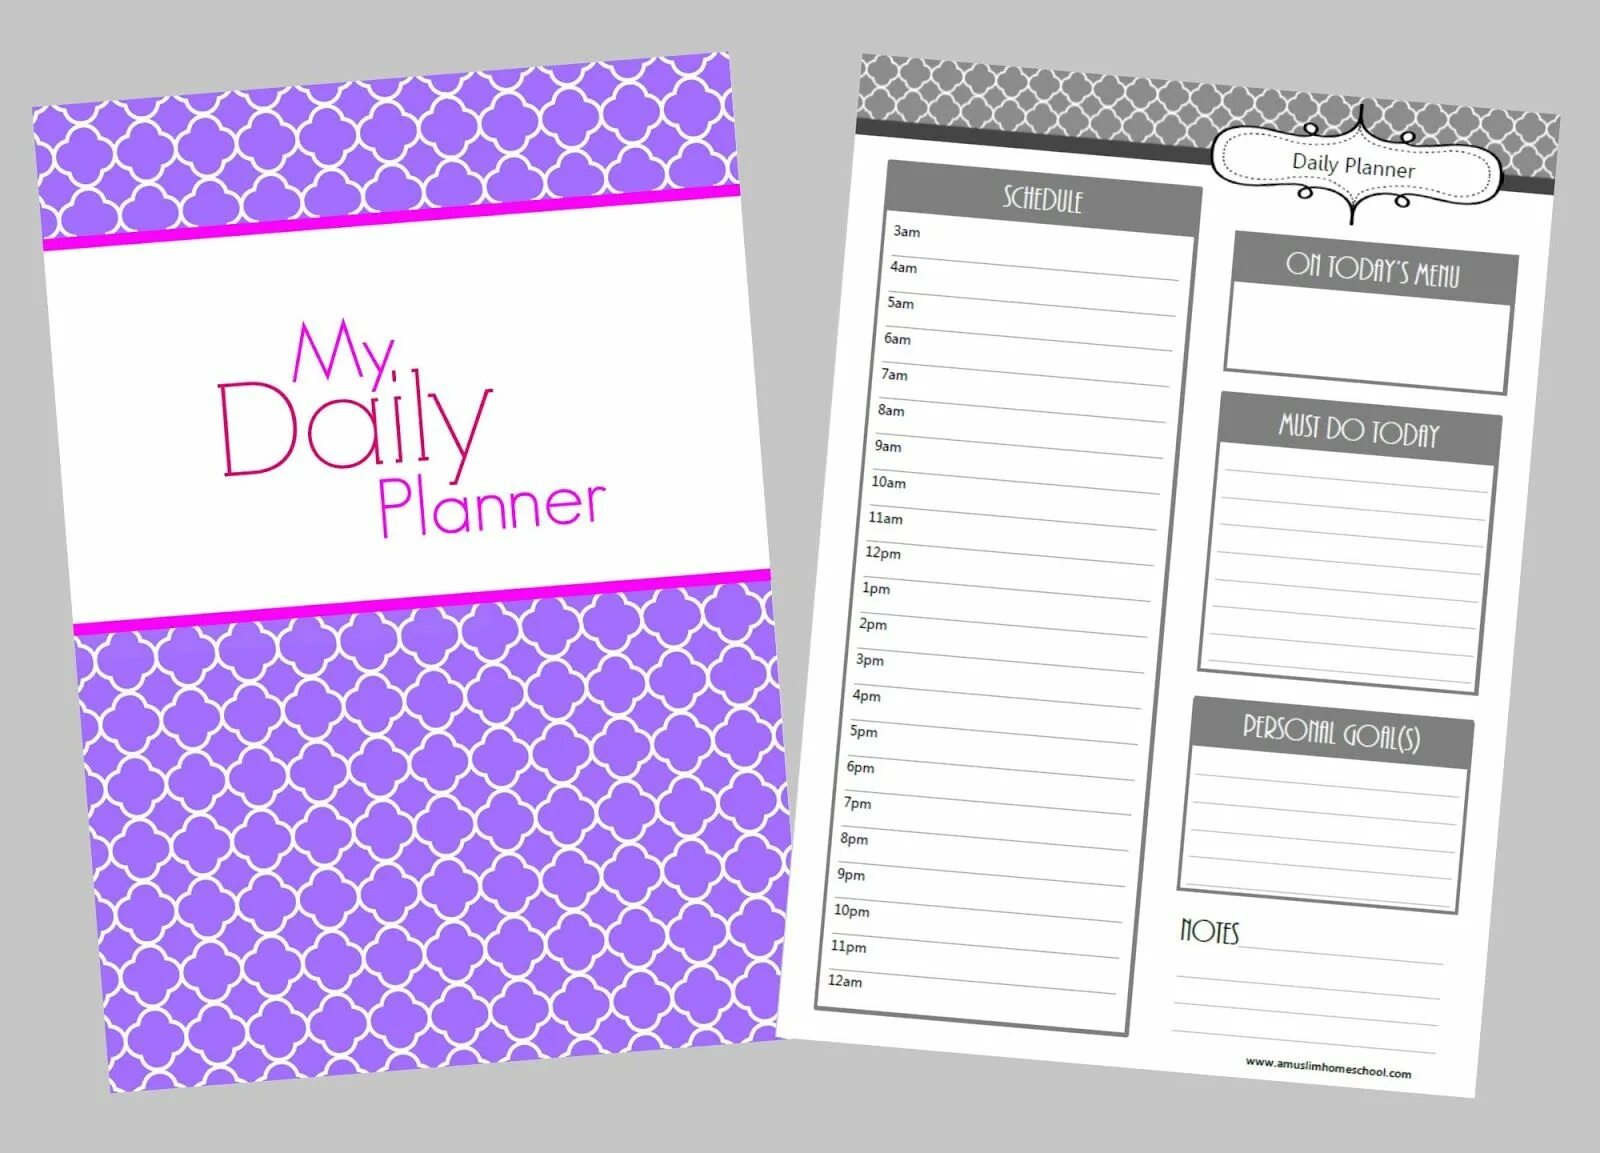 Daily Planner. Daily Planner для печати. Daily Planner шаблон. Планер для учебы.